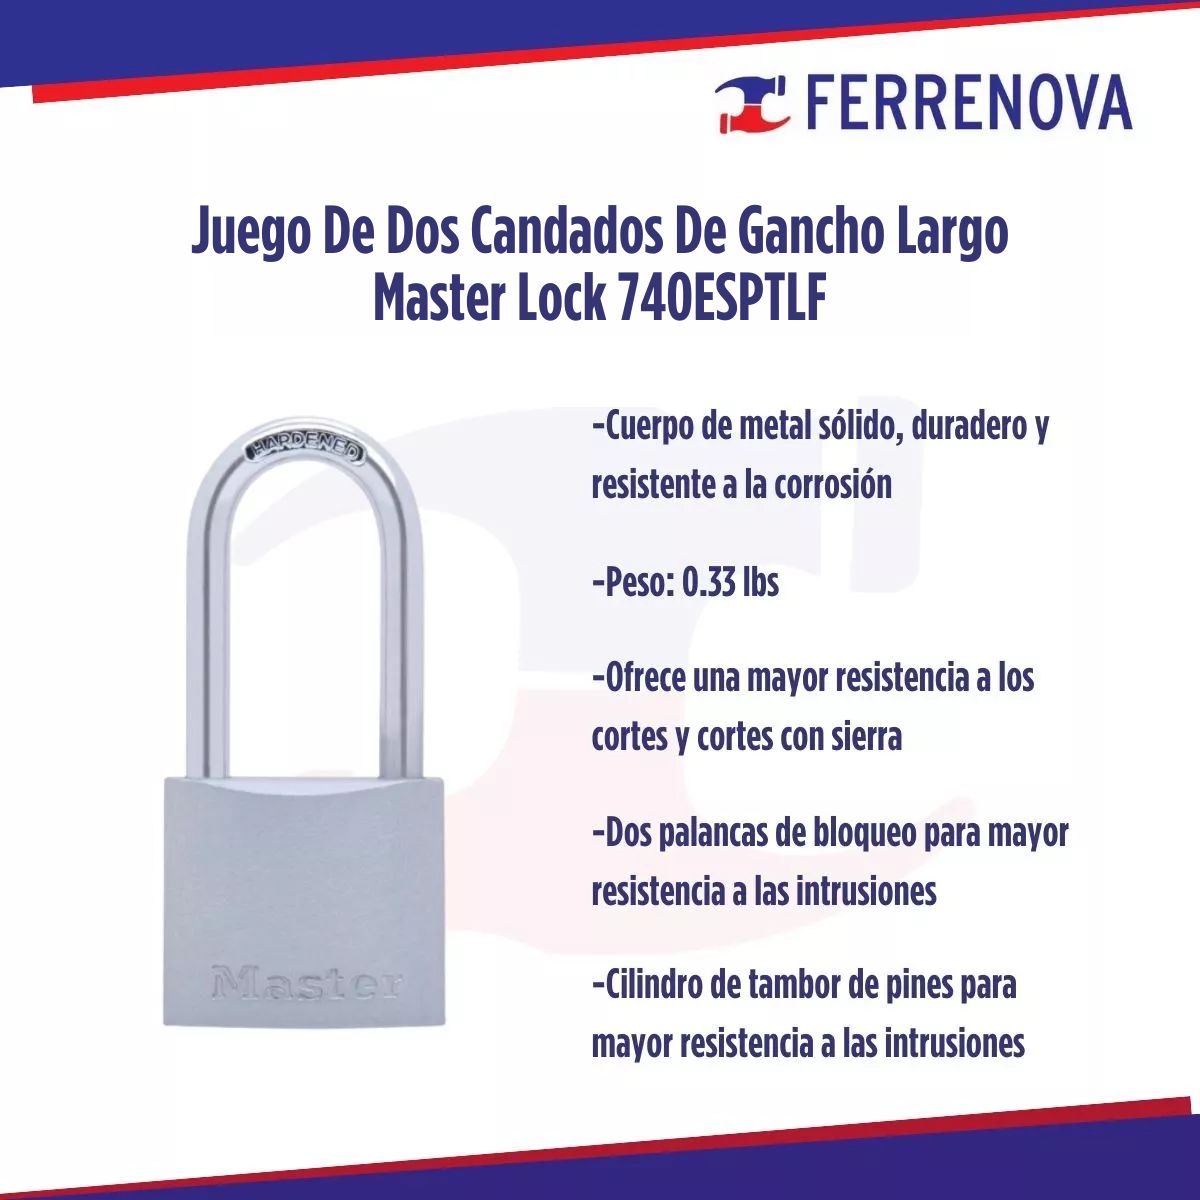 Juego De Dos Candados De Gancho Largo Master Lock 740ESPTLF